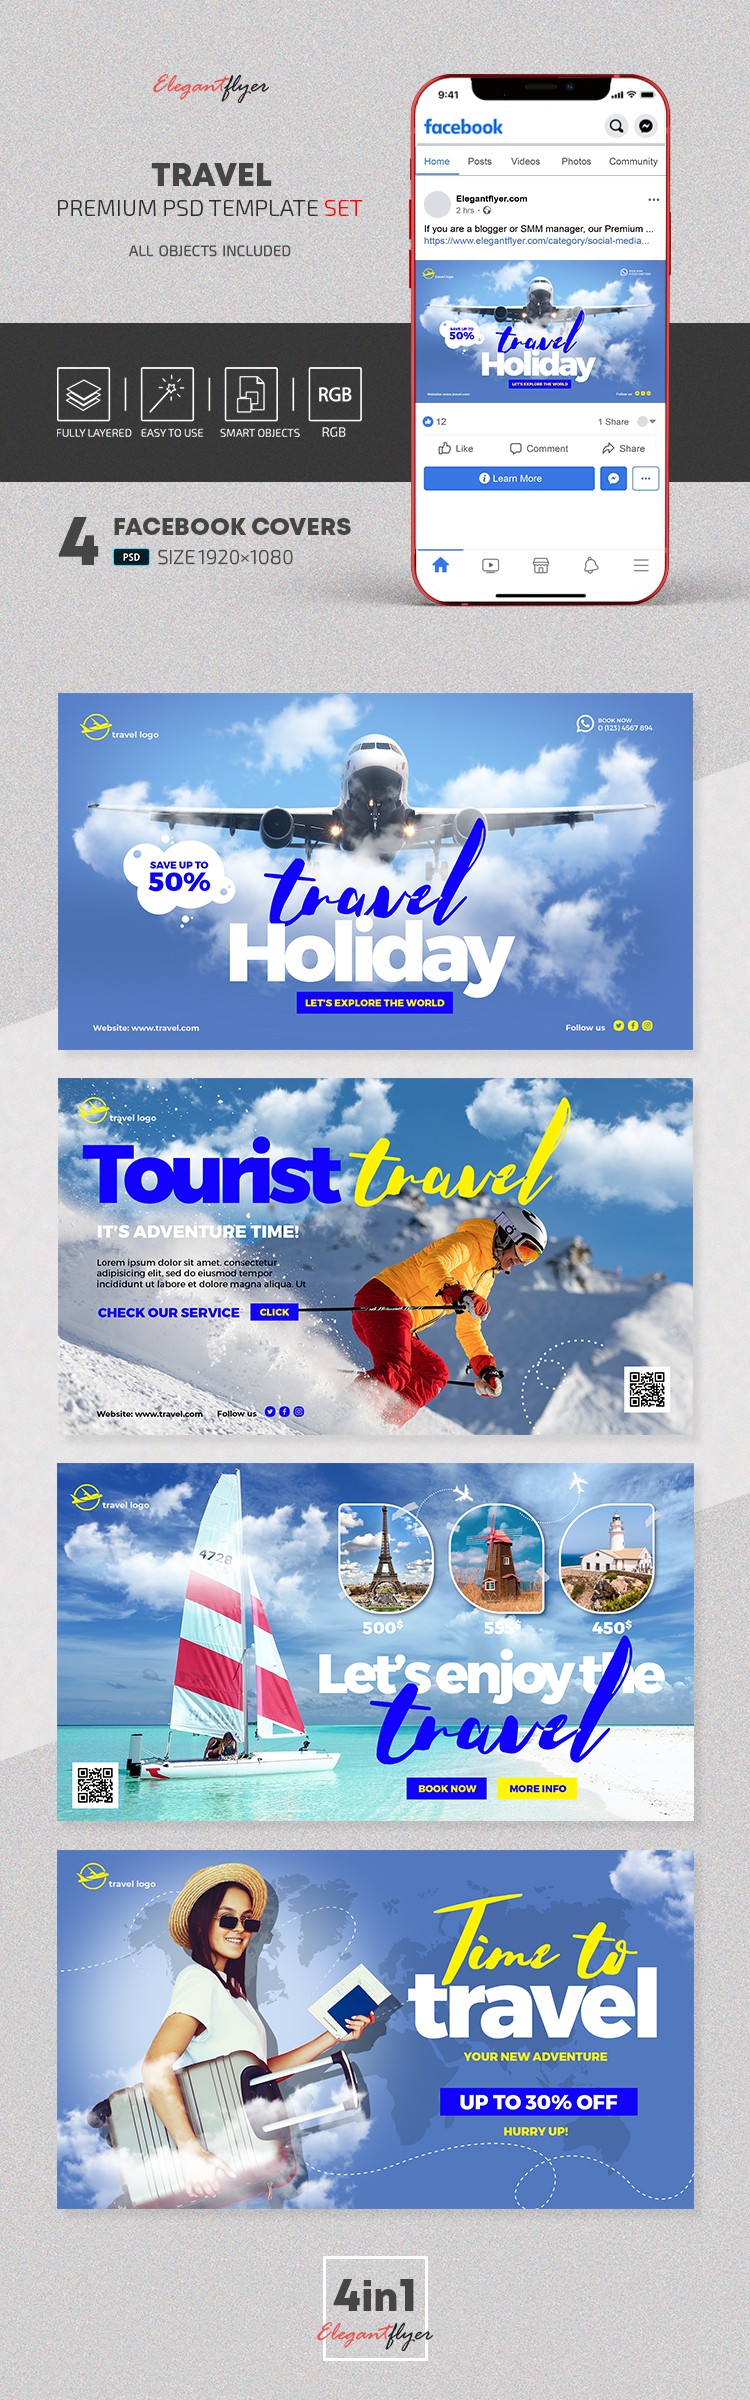 Travel - Facebook Cover Templates Set in PSD by ElegantFlyer